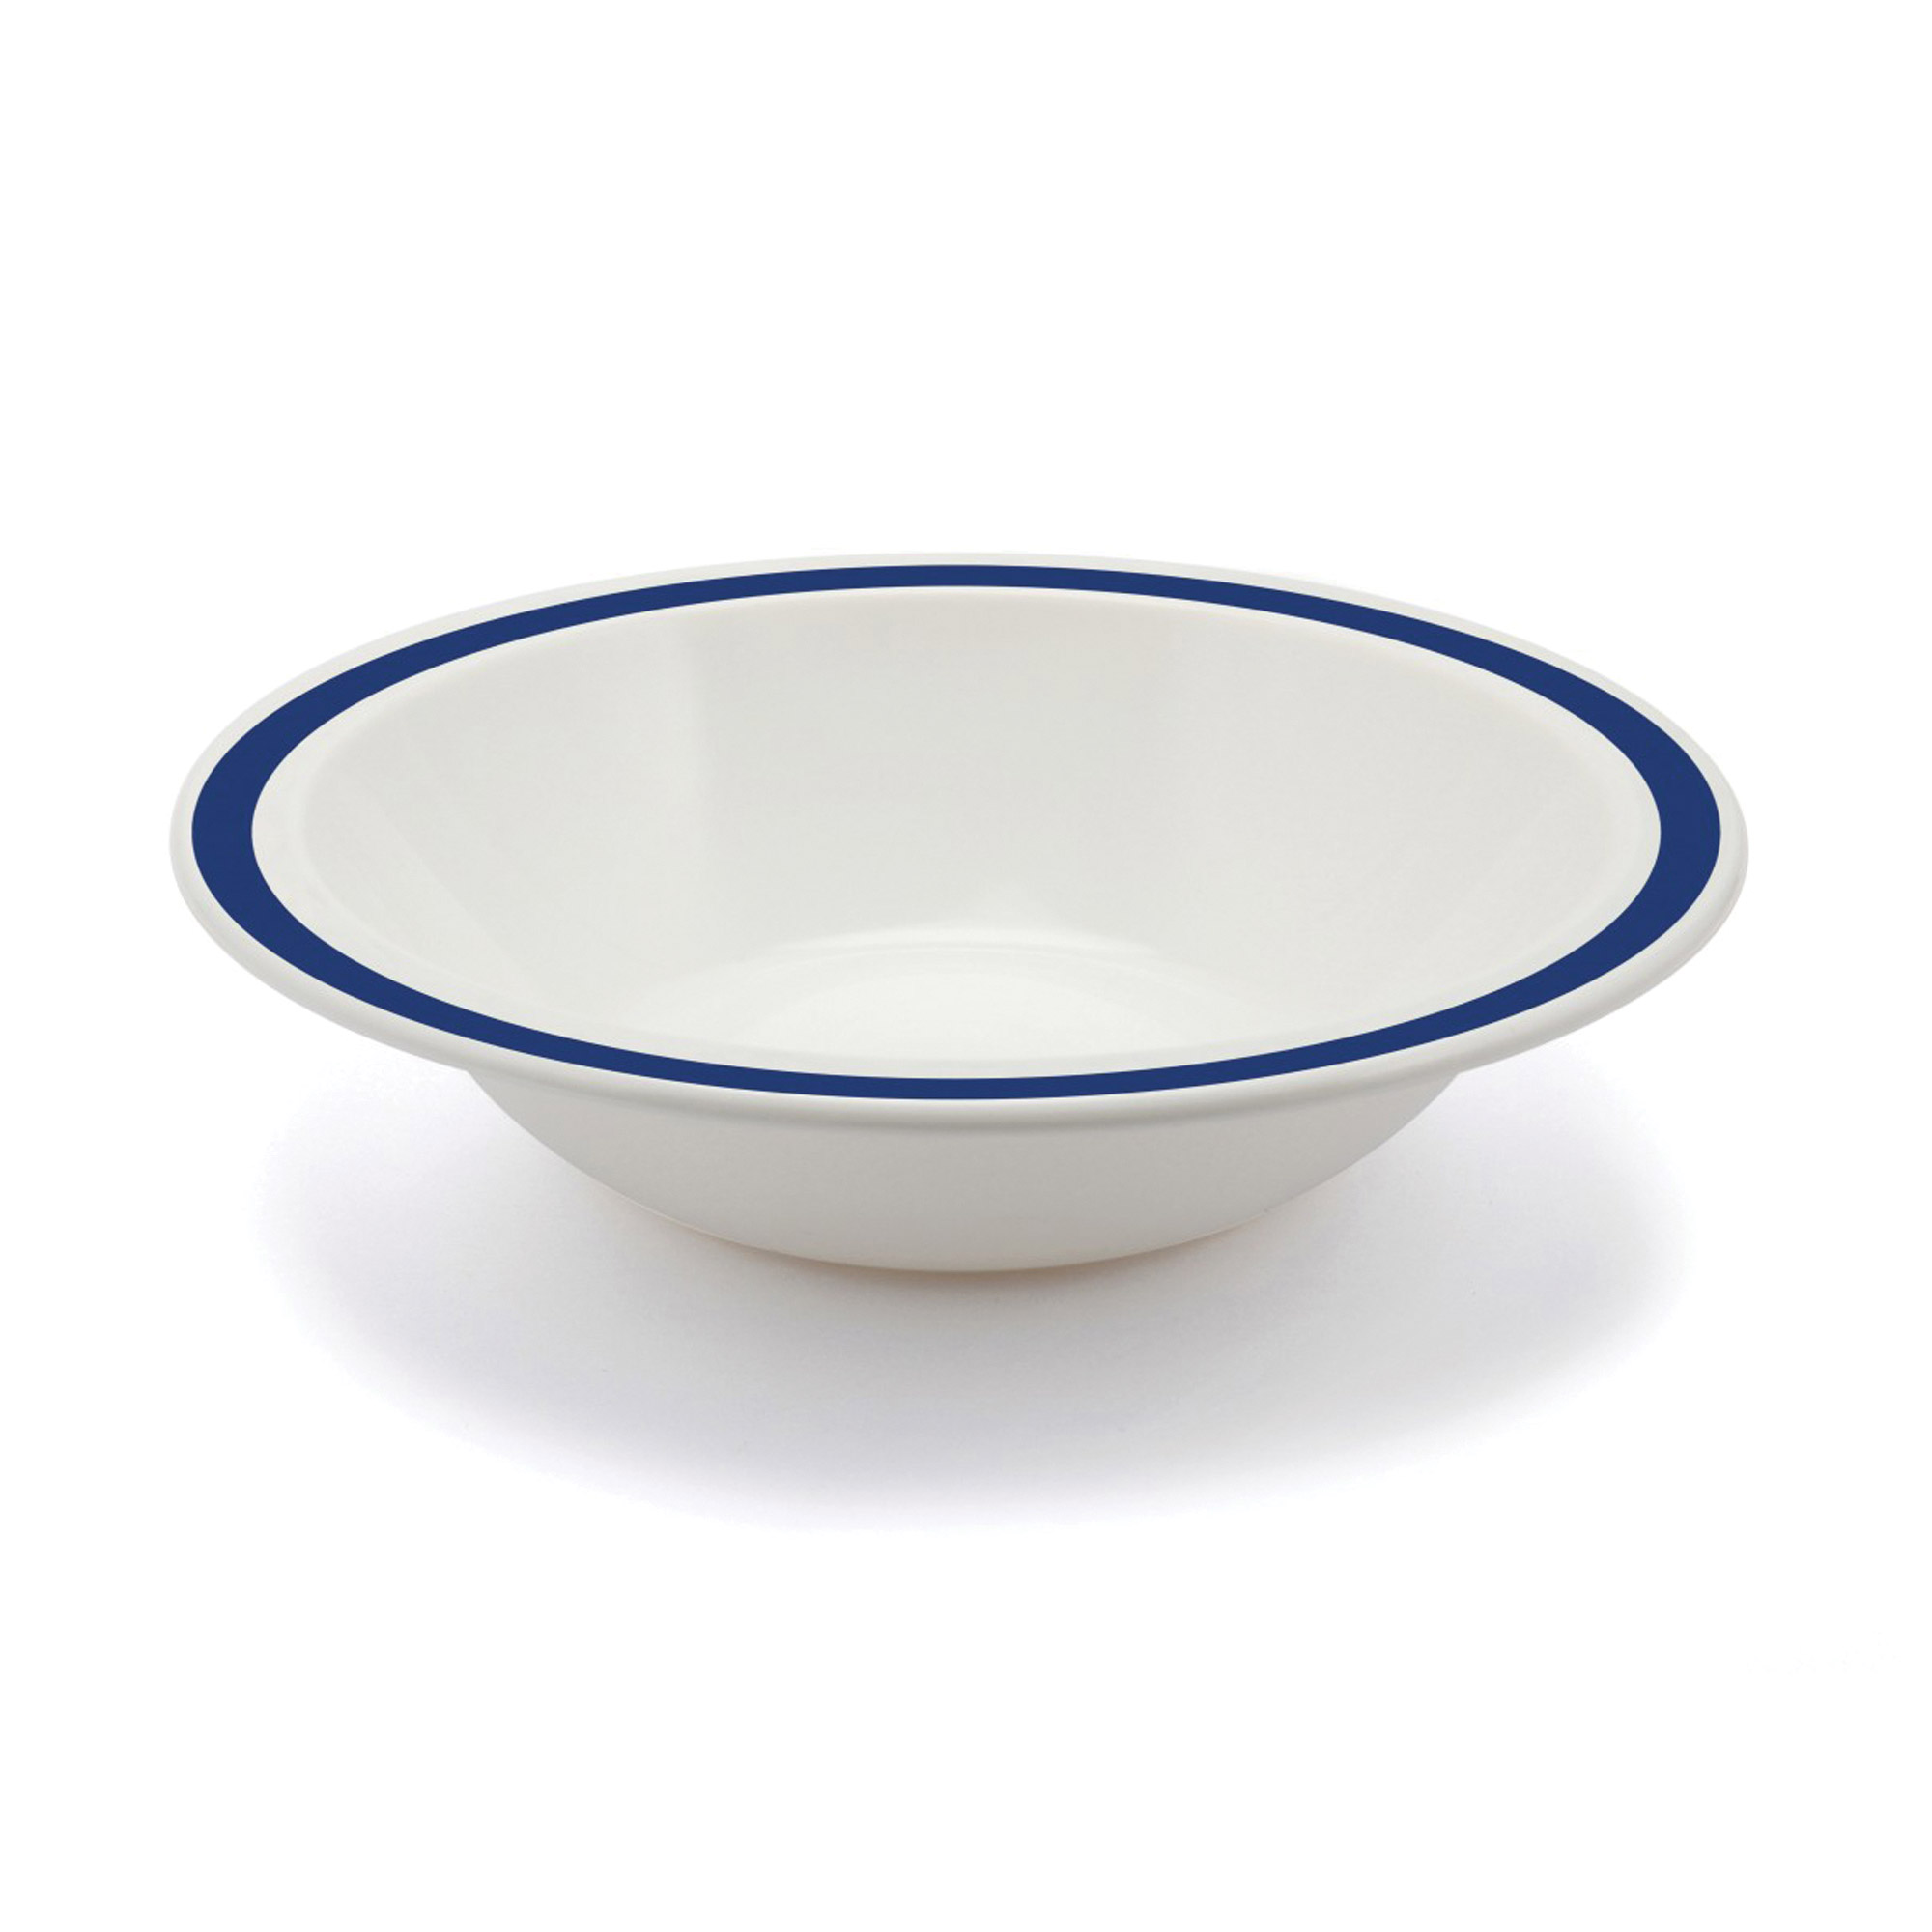 Polycarb White Bowl Narrow Med Blue Rim - Each